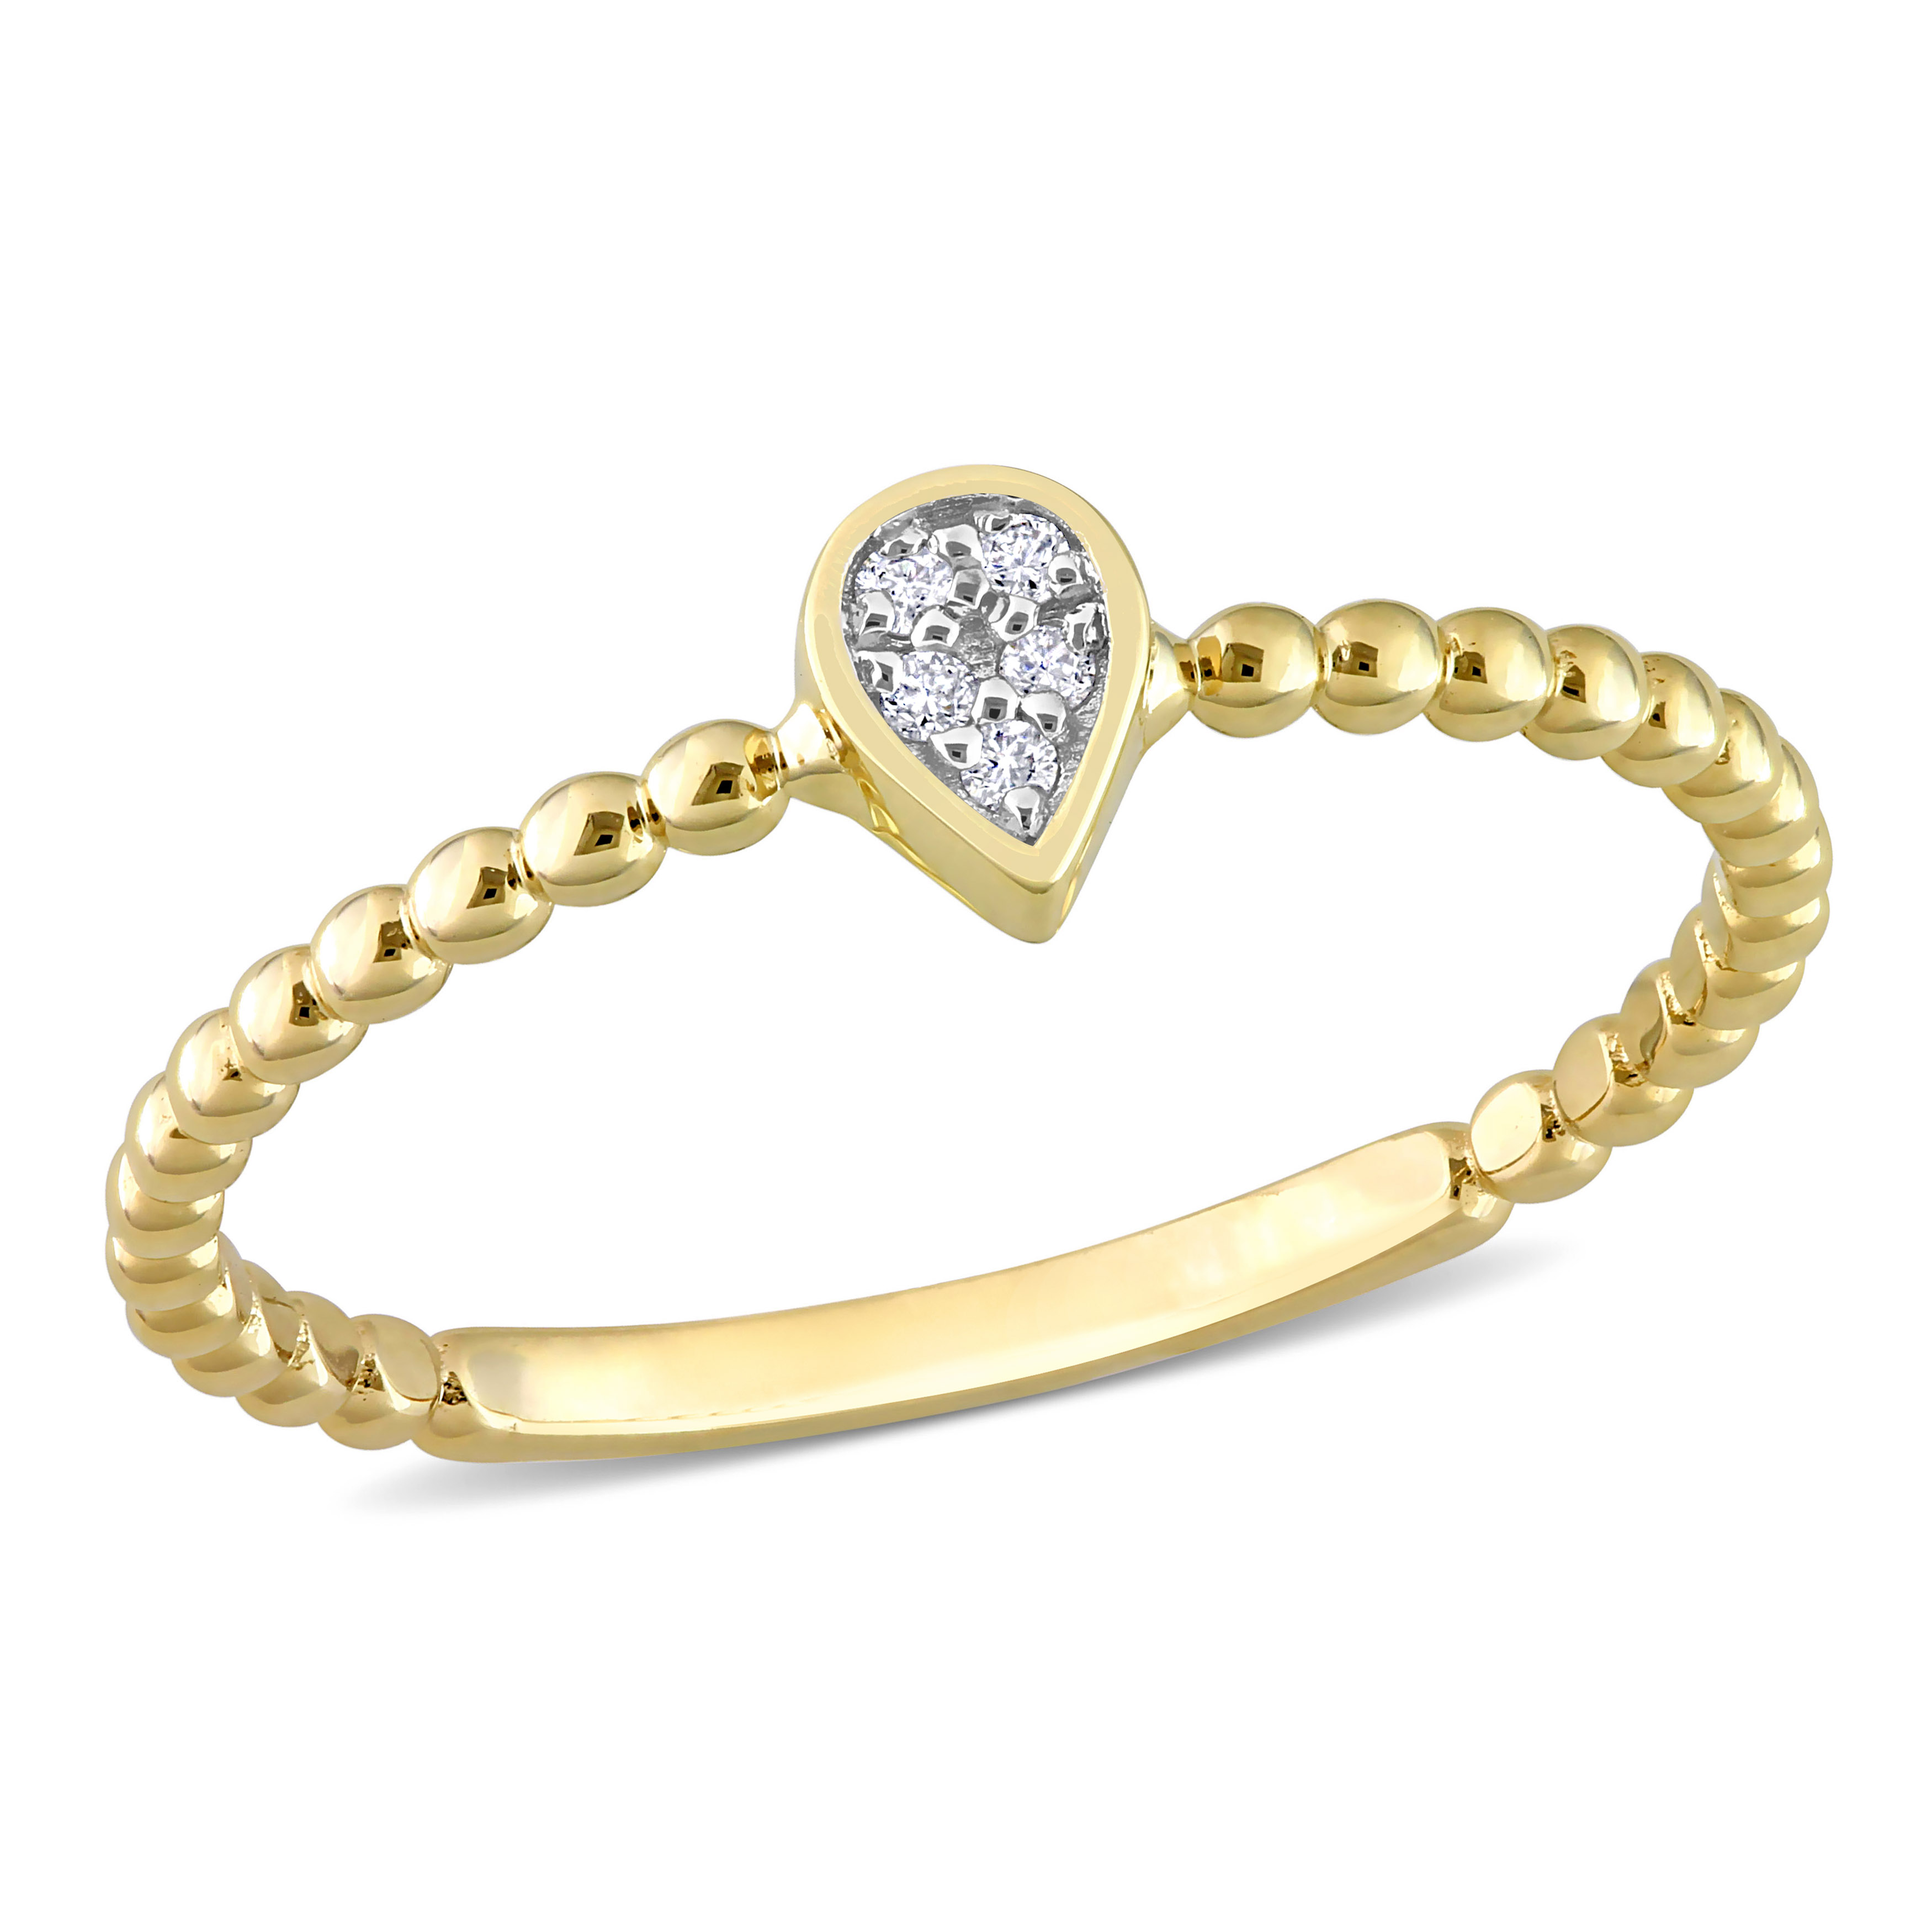 Diamond Accent Teardrop Ring in 14k Yellow Gold